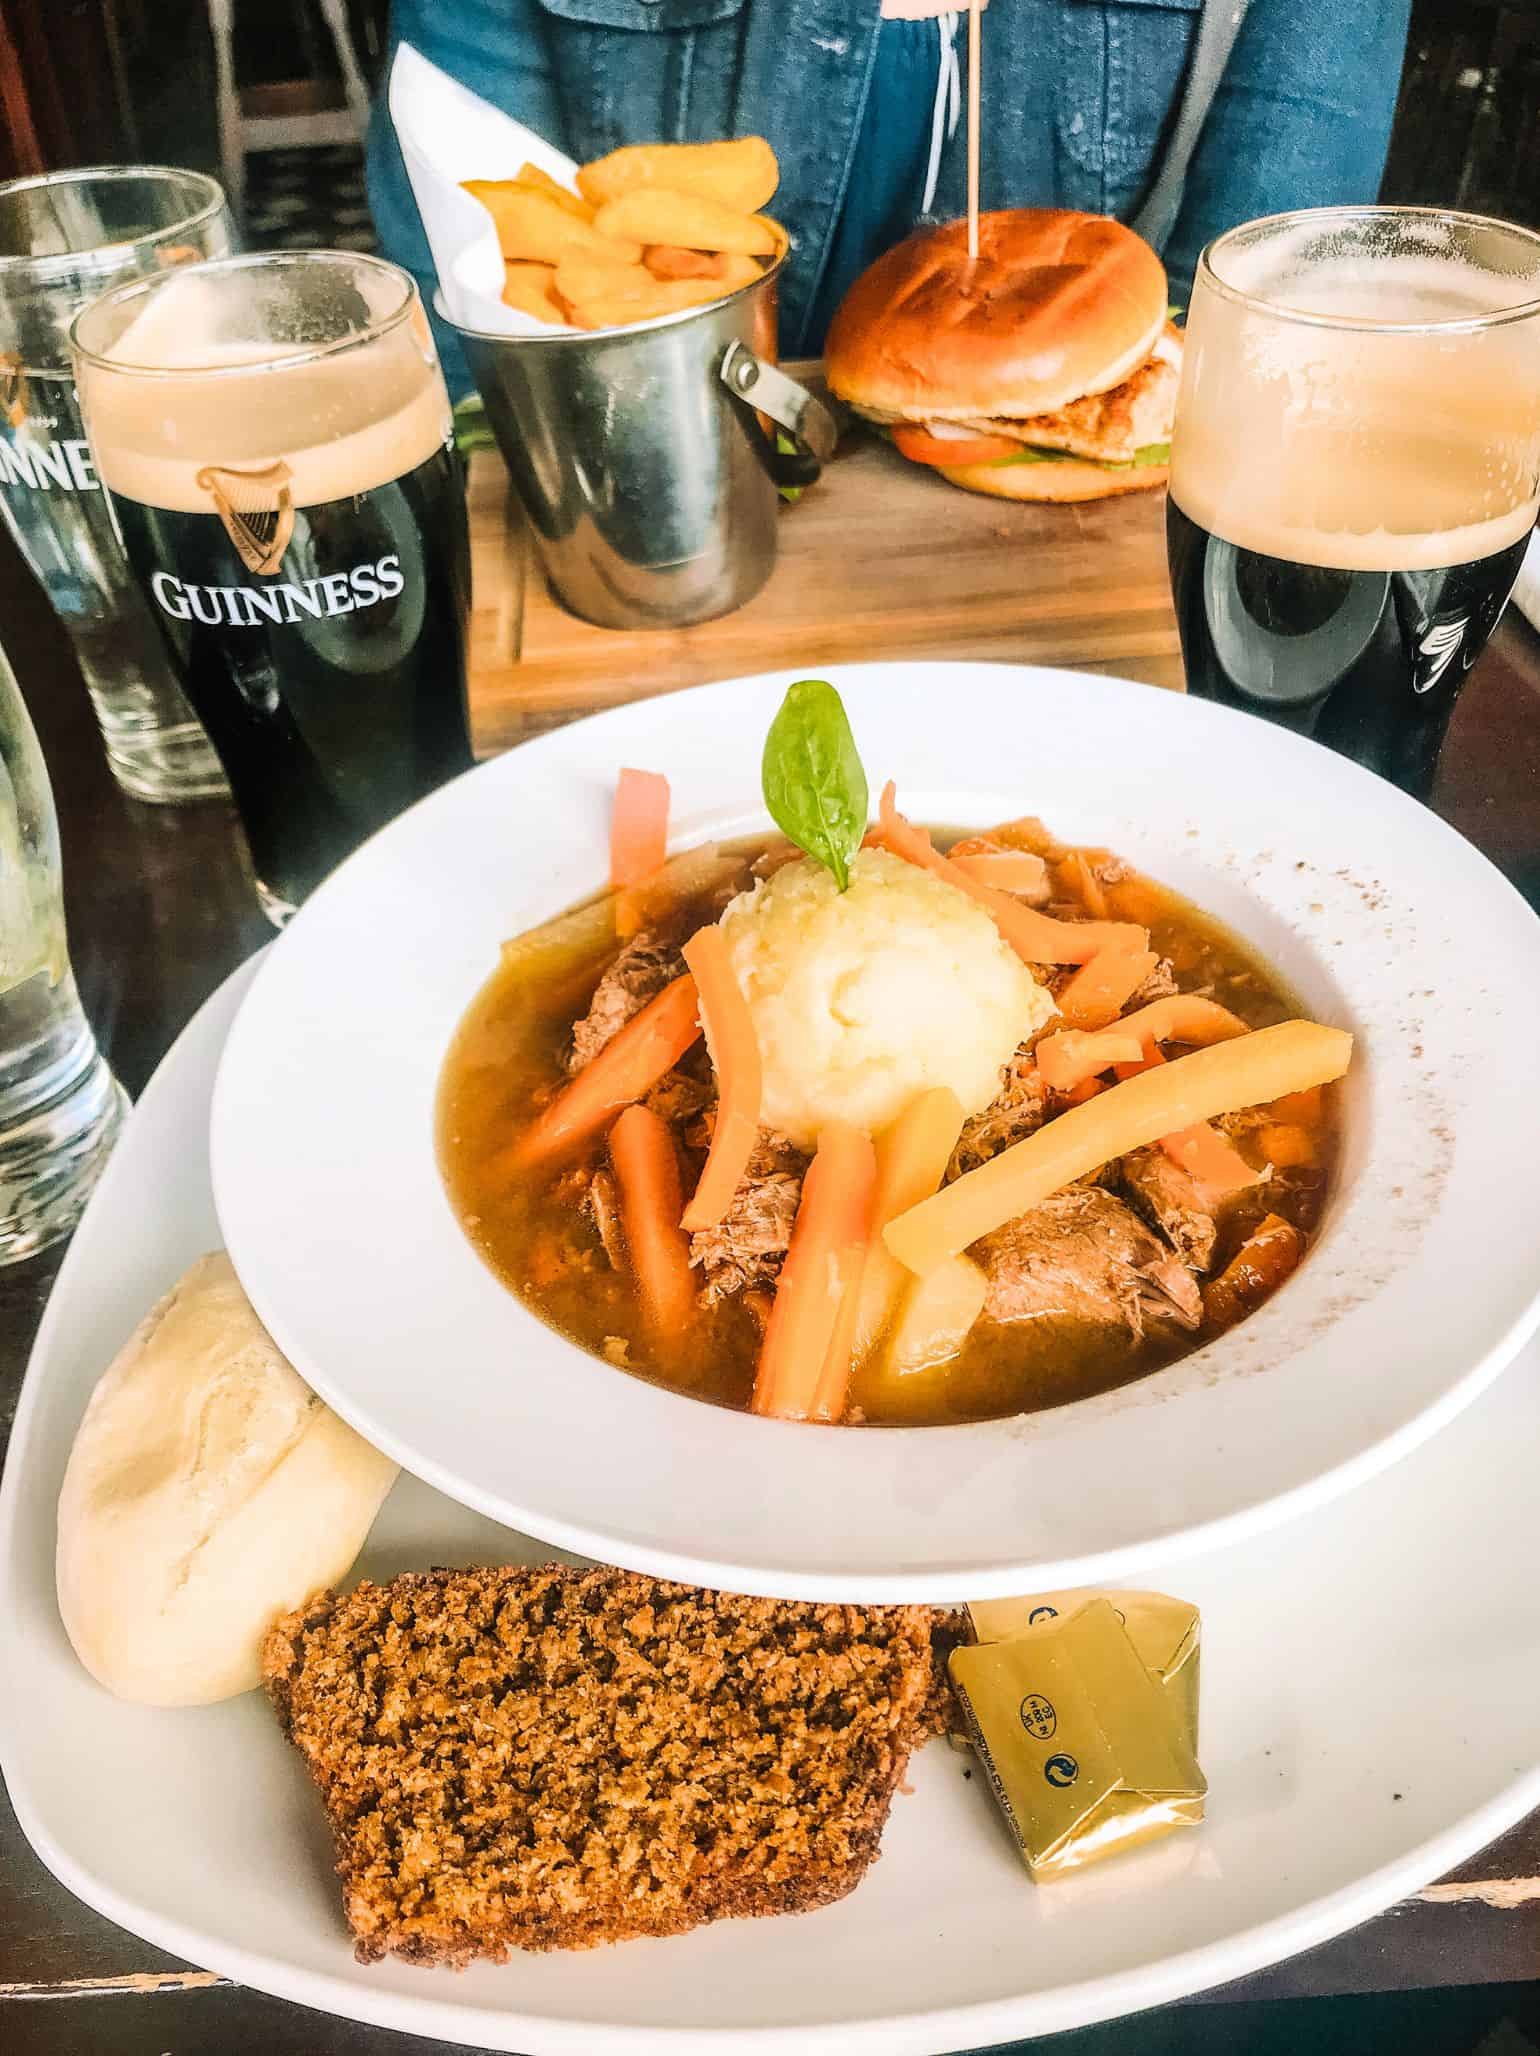 Irish stew with soda bread from Fitzgerald's in Dublin. 